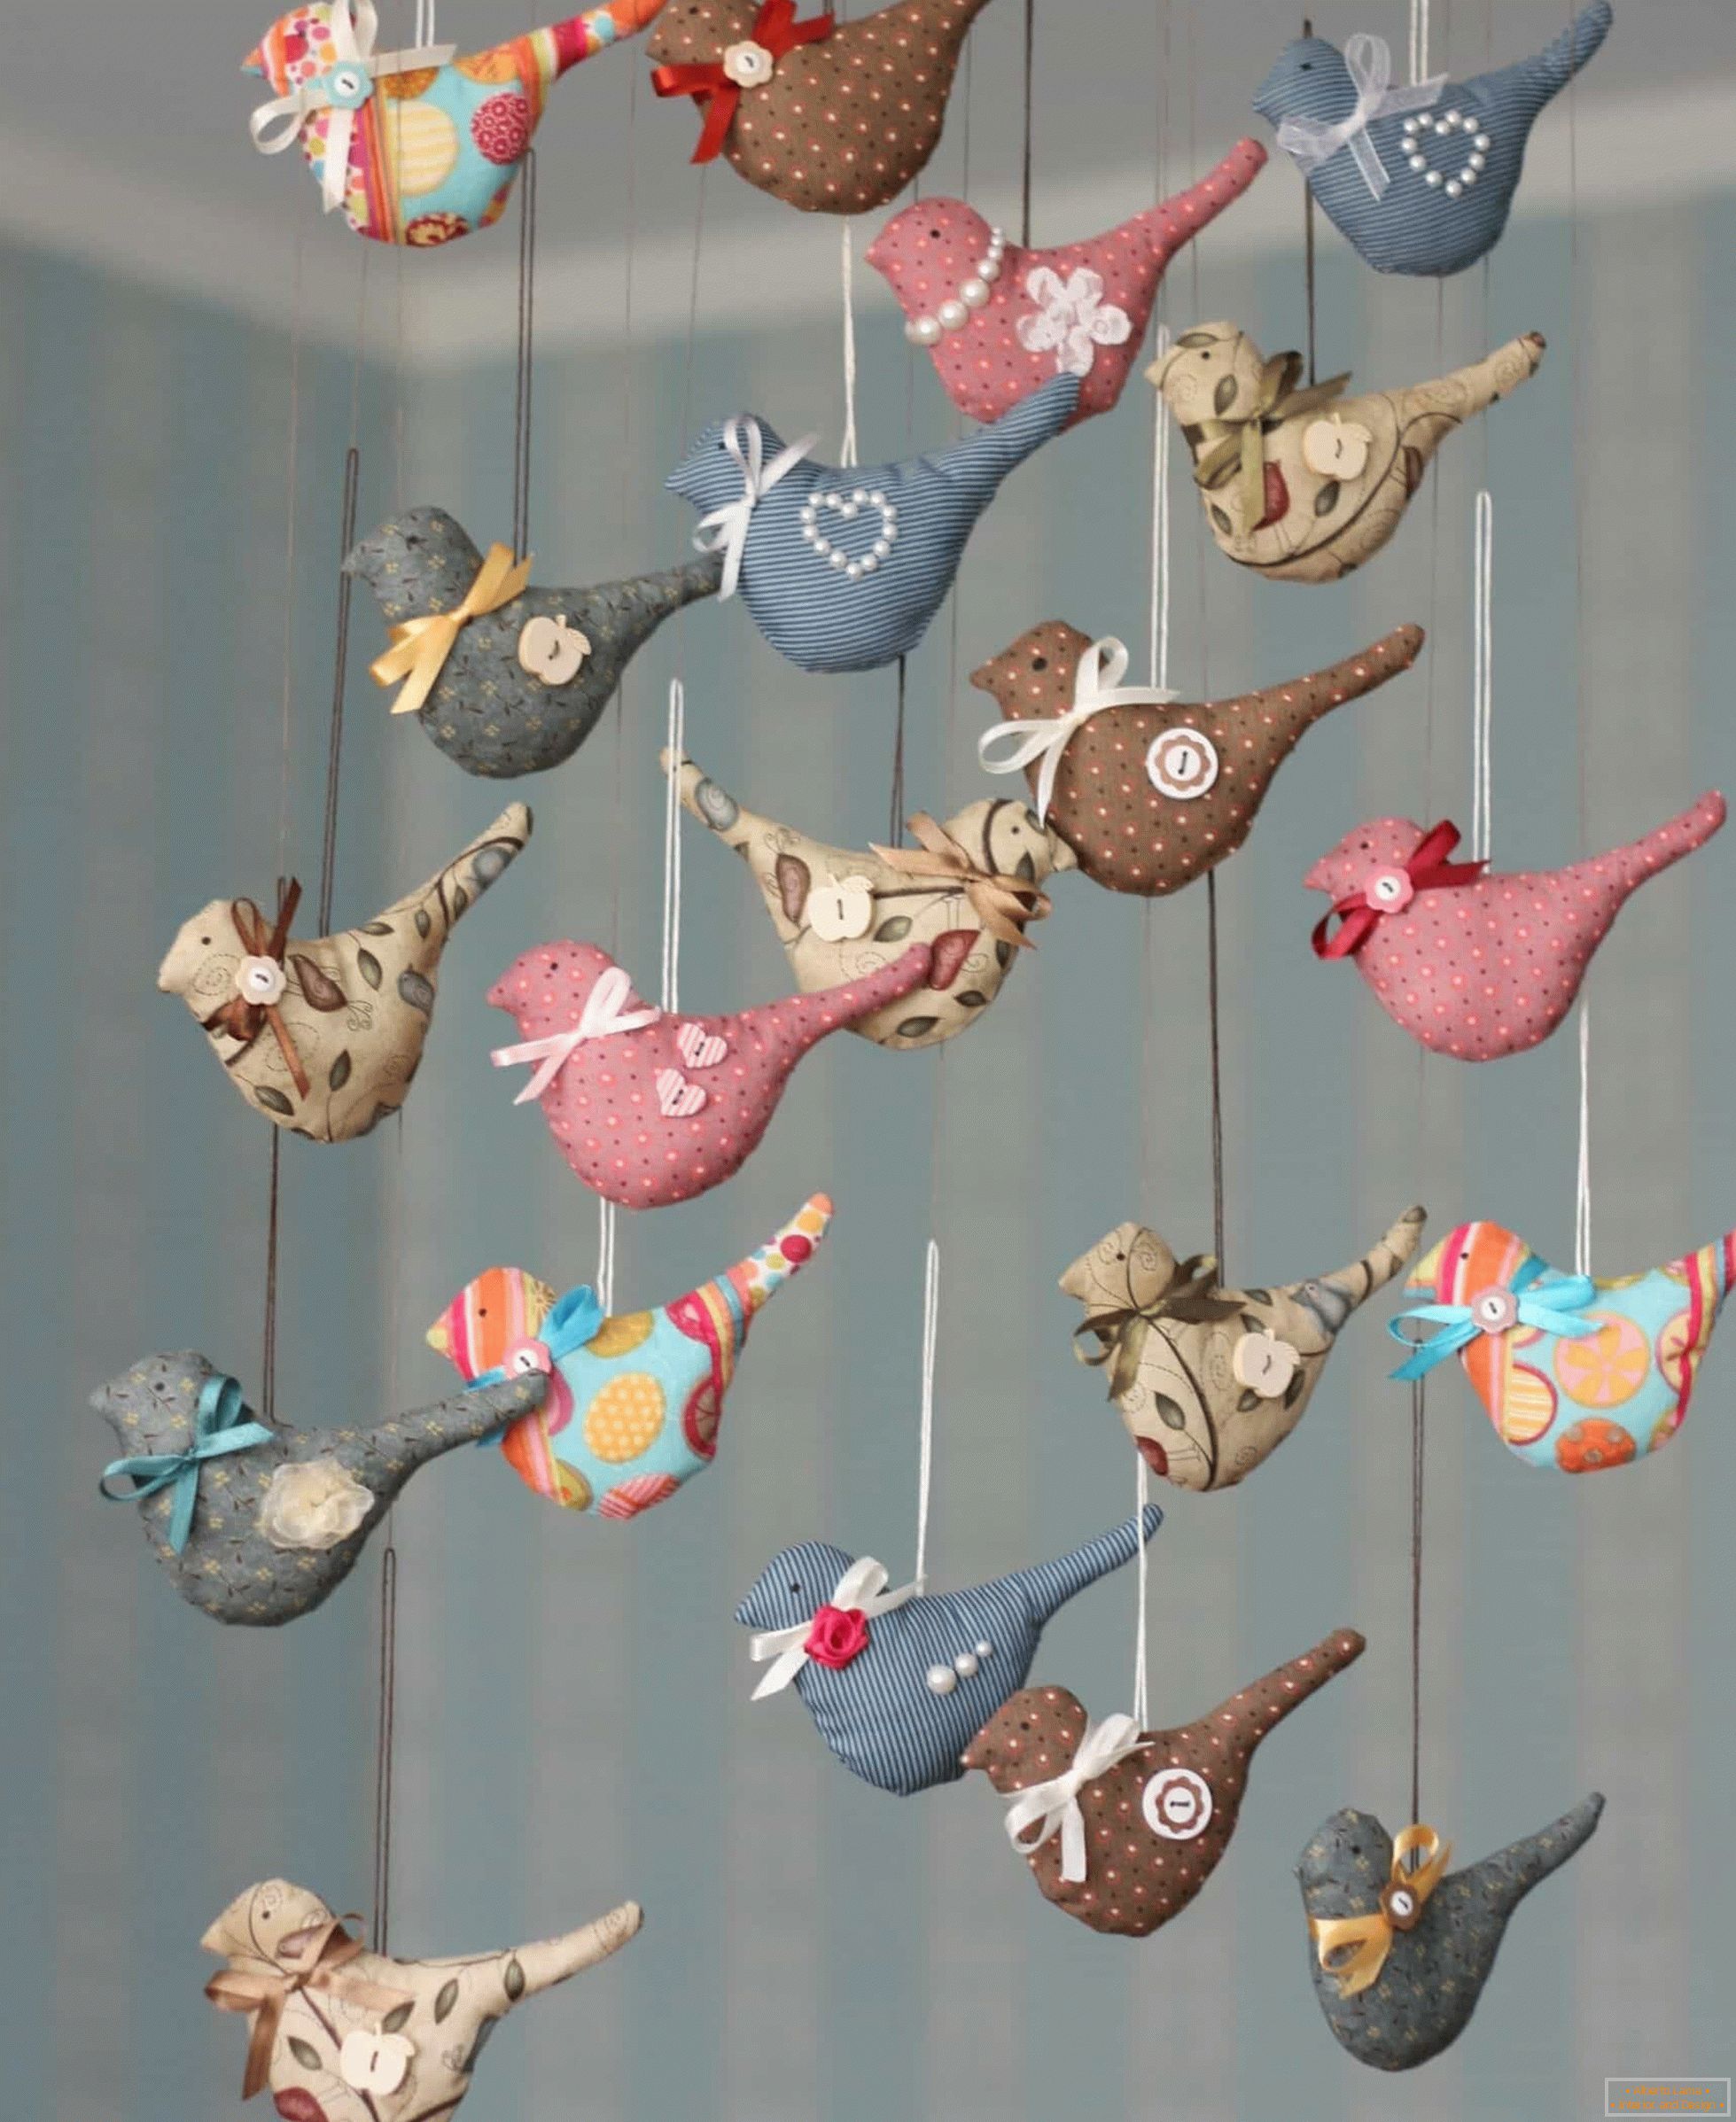 Hanging ornaments - birds